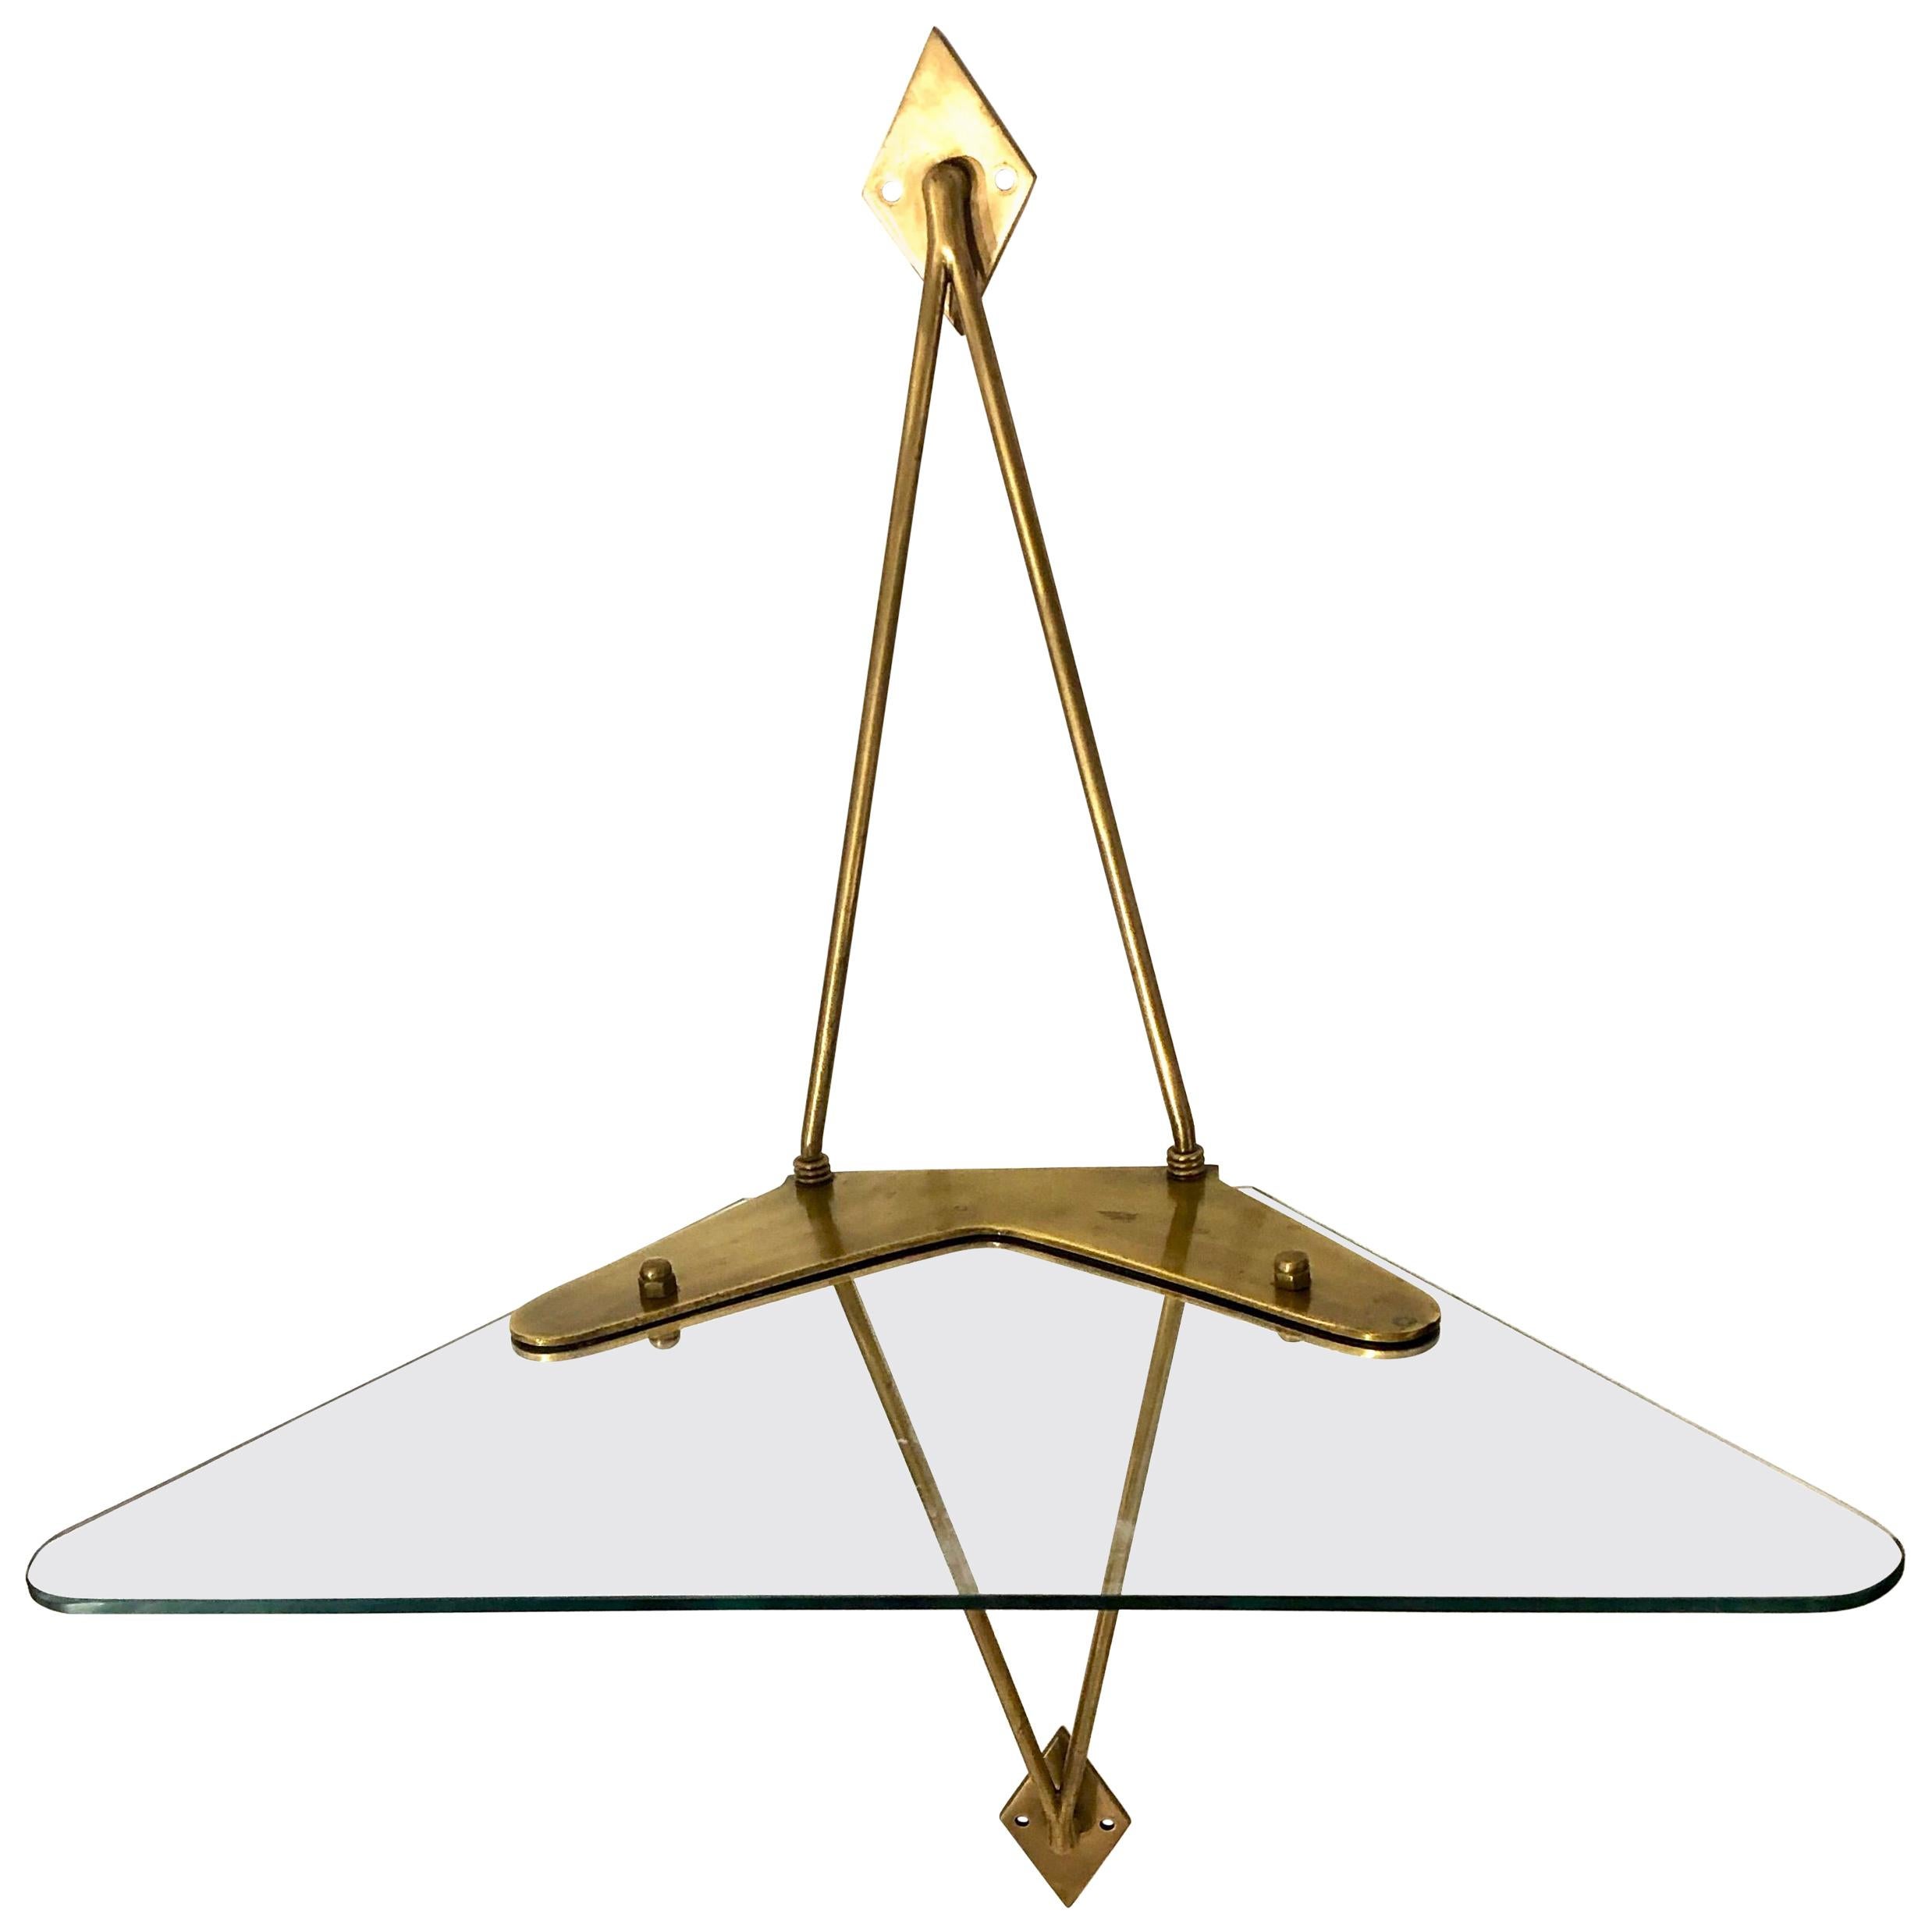 Brass and Glass Wall-Mounted Angle Display Shelf Attributed to Fontana Arte